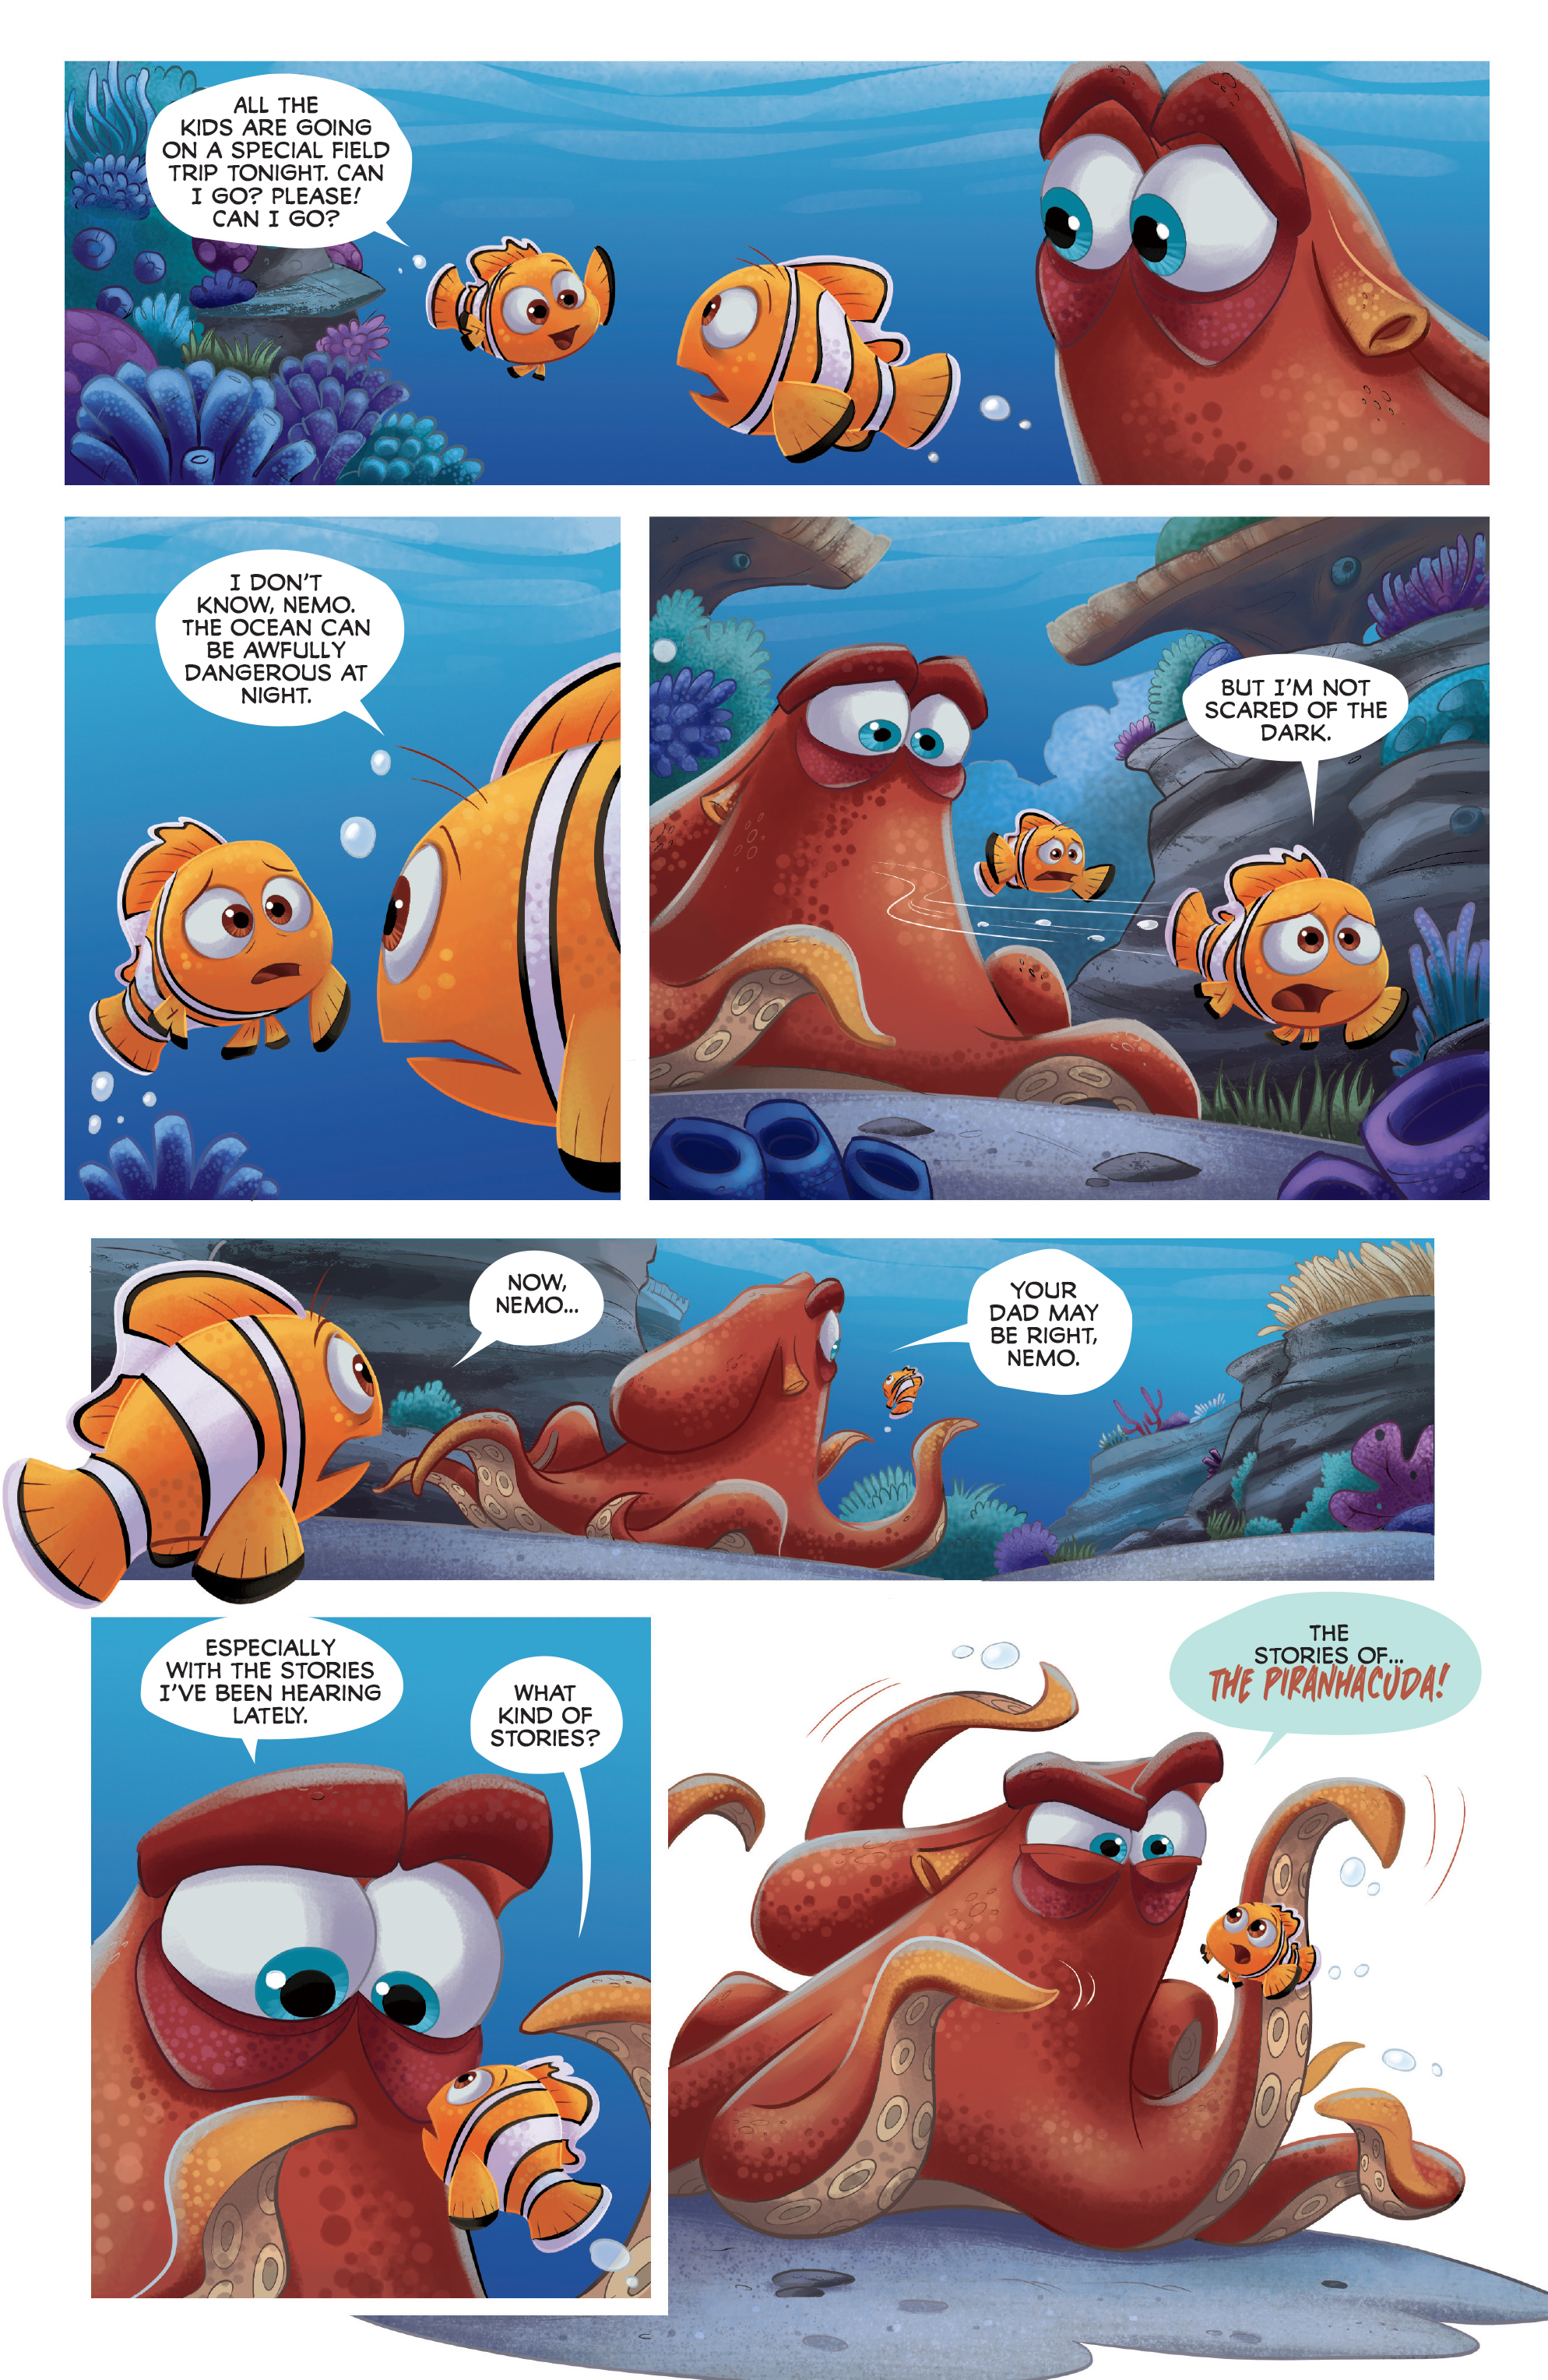 Finding Nemo Porn Comic - Disney Pixar Finding Dory Issue 4 | Read Disney Pixar Finding Dory Issue 4  comic online in high quality. Read Full Comic online for free - Read comics  online in high quality .| READ COMIC ONLINE